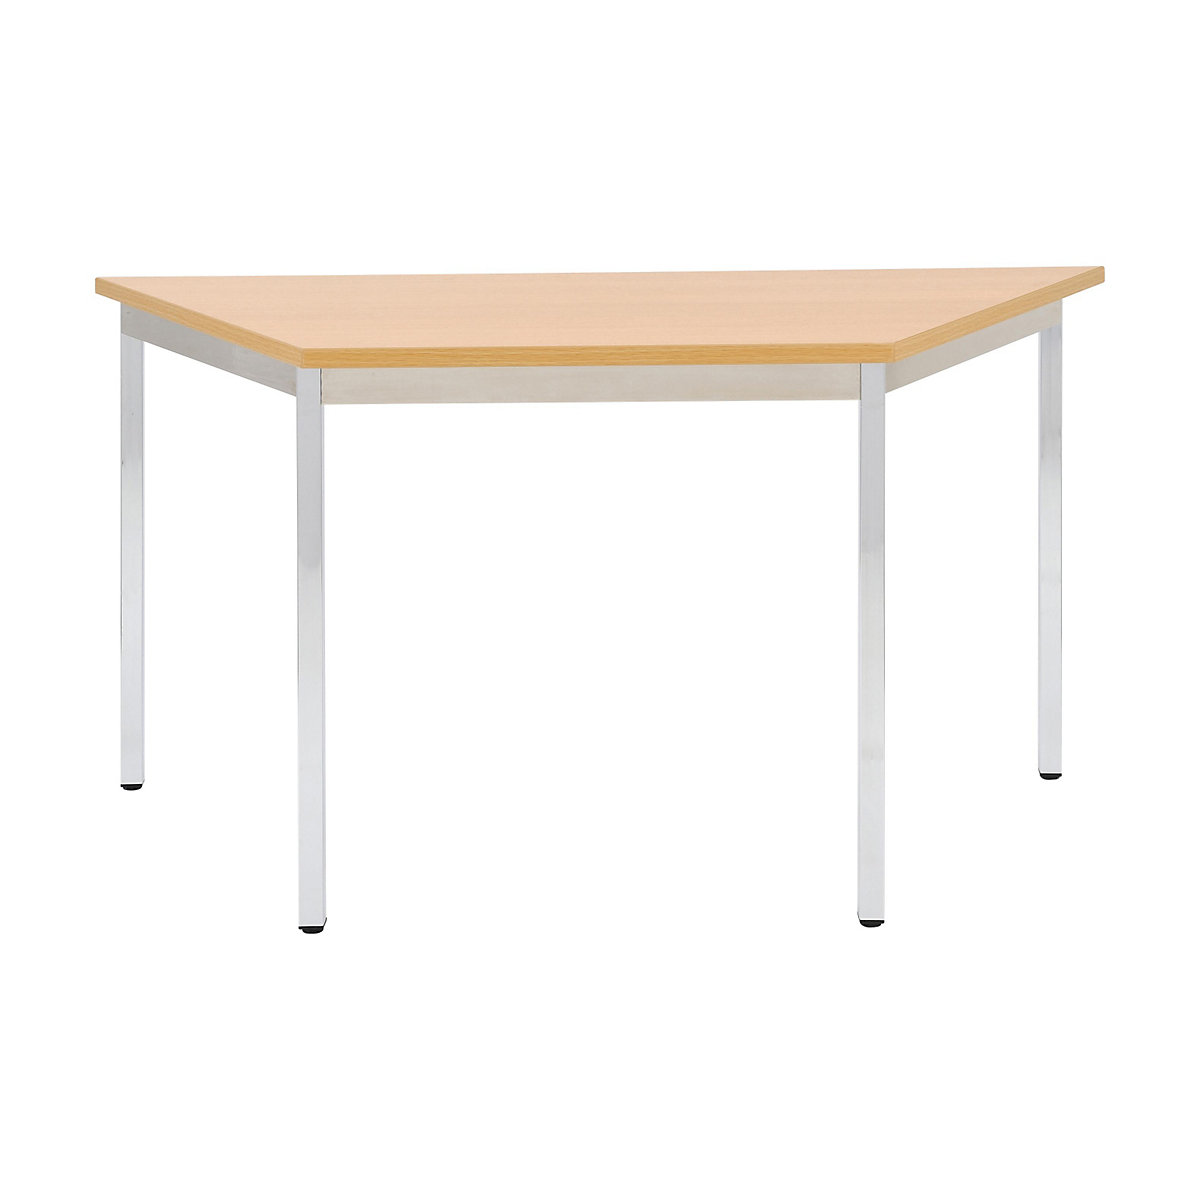 Višenamjenski stol – eurokraft basic, u obliku trapeza, VxŠxD 740 x 1200 x 600 mm, ploča u imitaciji bukve, kromirano postolje-15